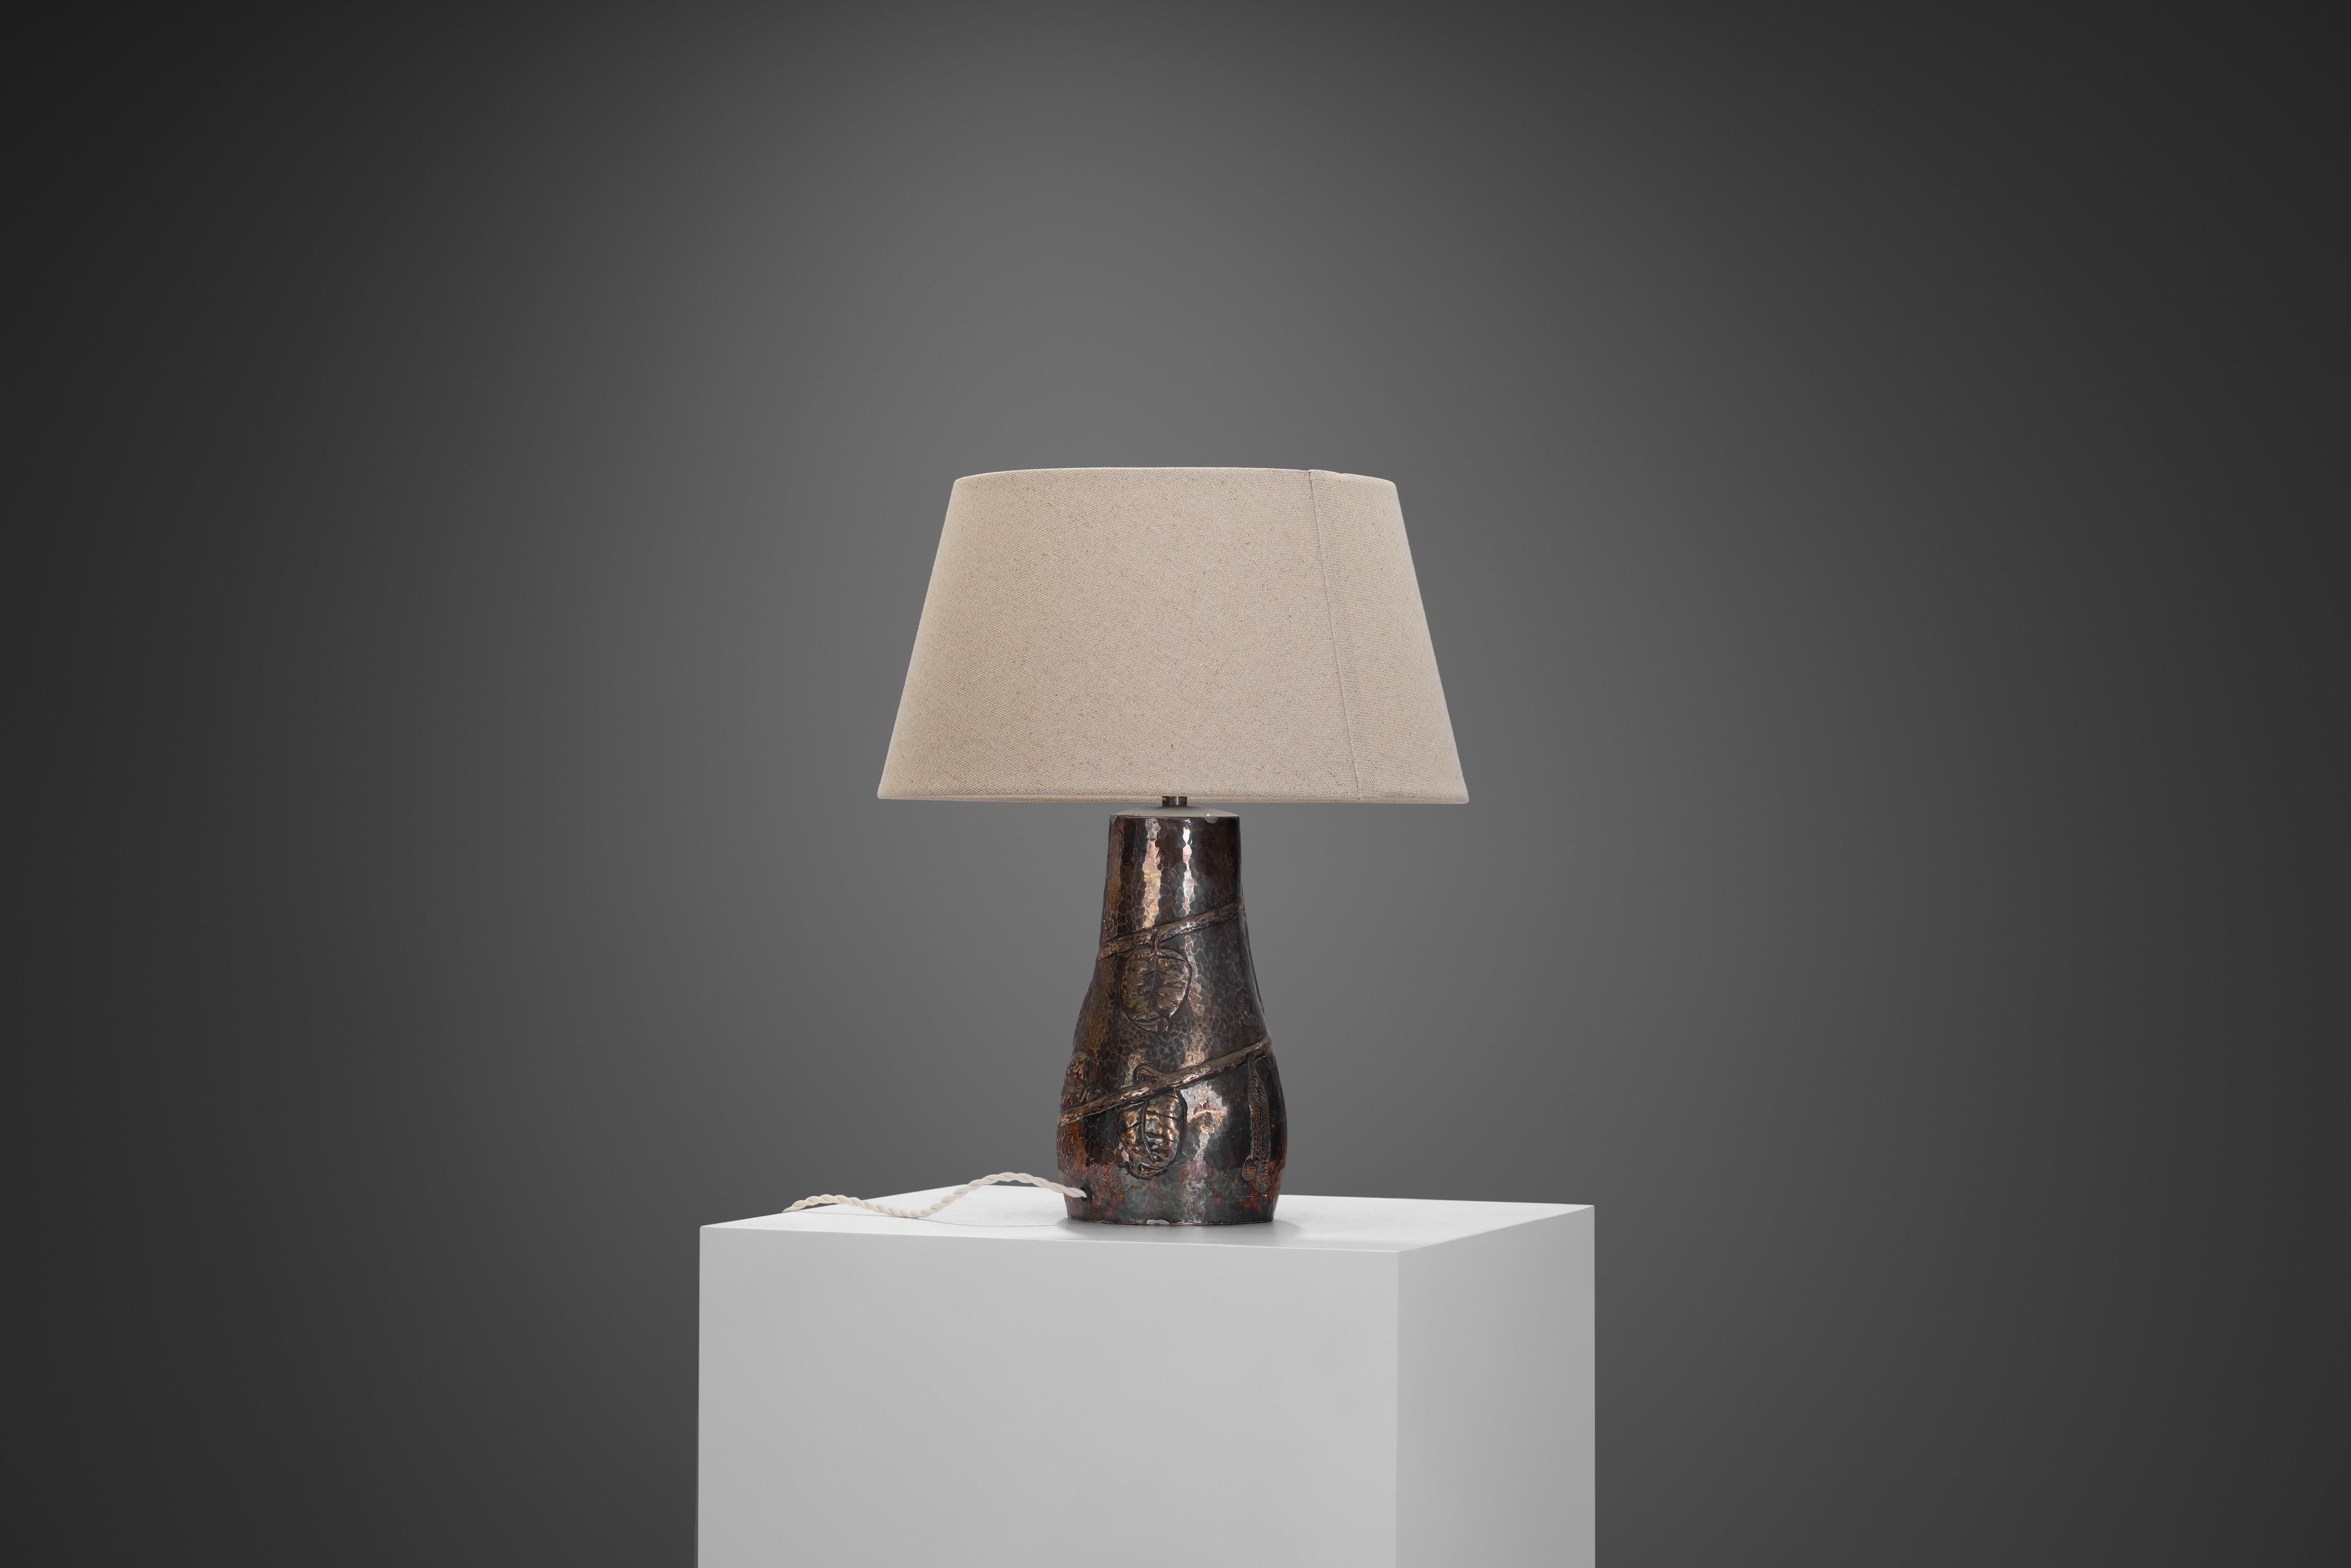 Copper Table Lamp for Svensk Metallkonst AB, Sweden Early 20th Century For Sale 2